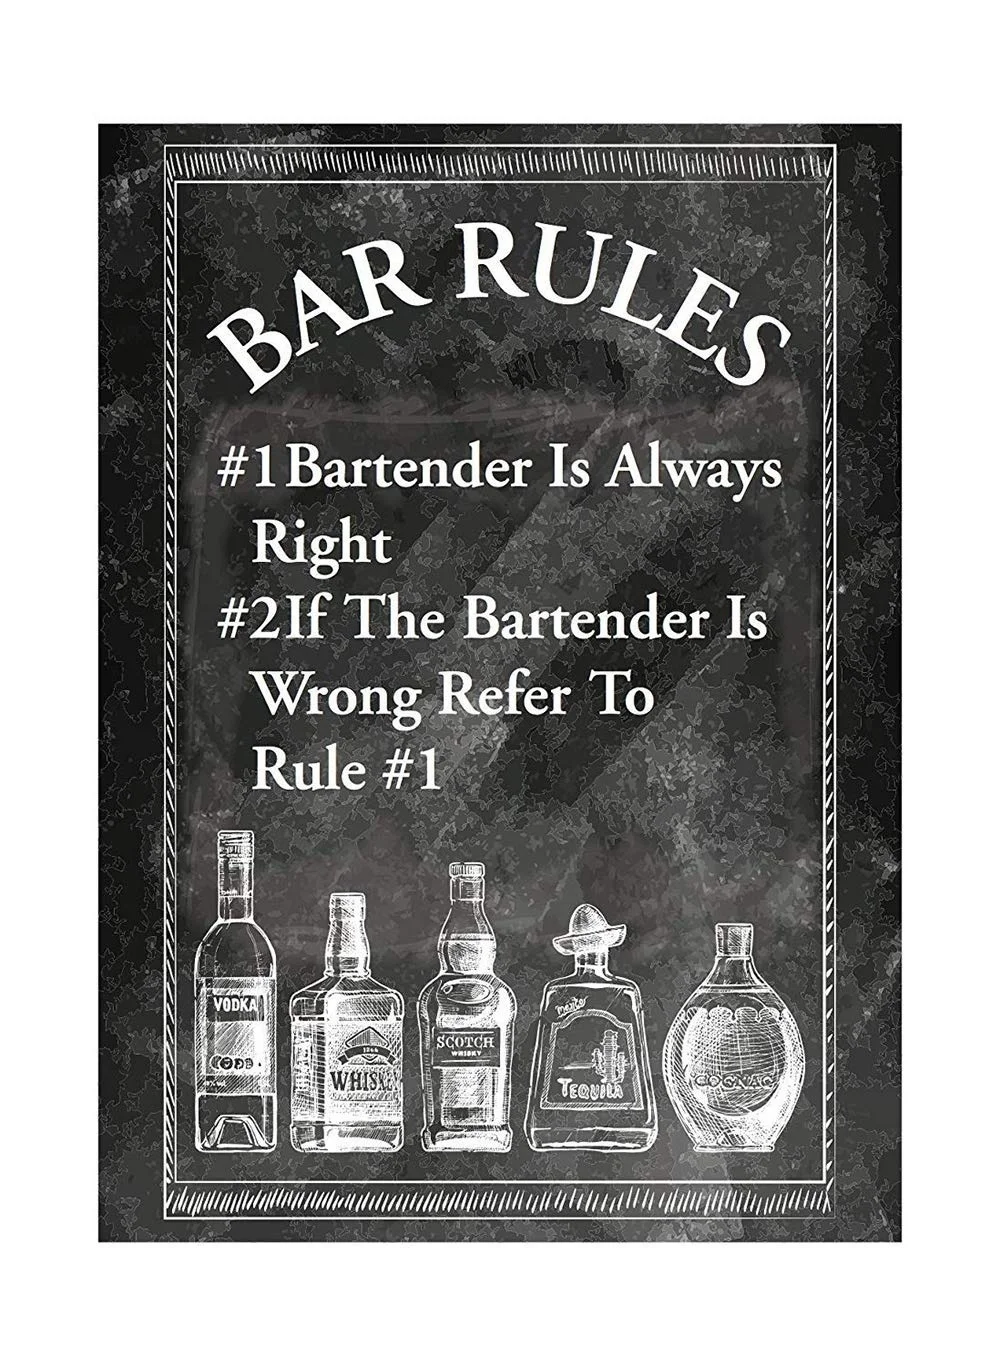 

Rules tender Is Always Right Humor Retro tin sign nostalgic ornament metal poster garage art deco bar cafe shop